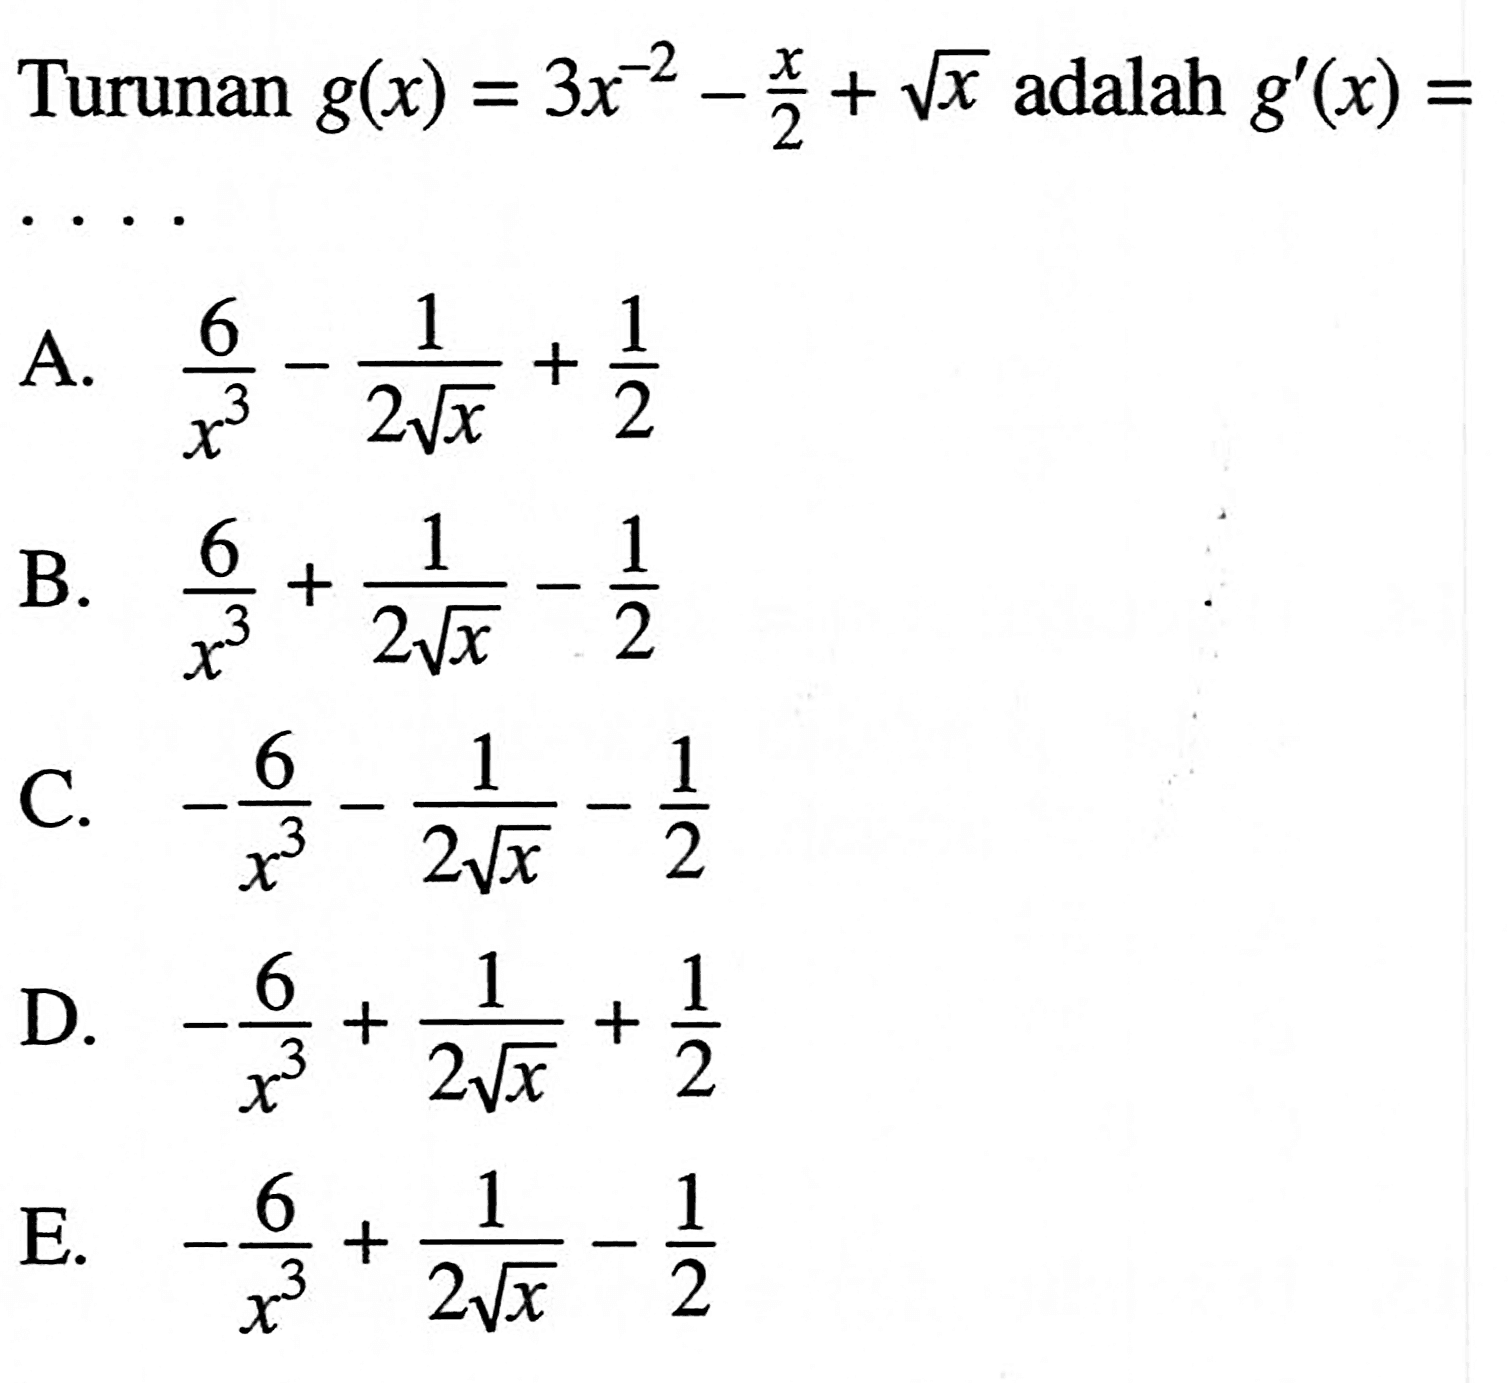 Turunan  g(x)=3x^-2-x/2+akar(x)  adalah  g'(x)= 